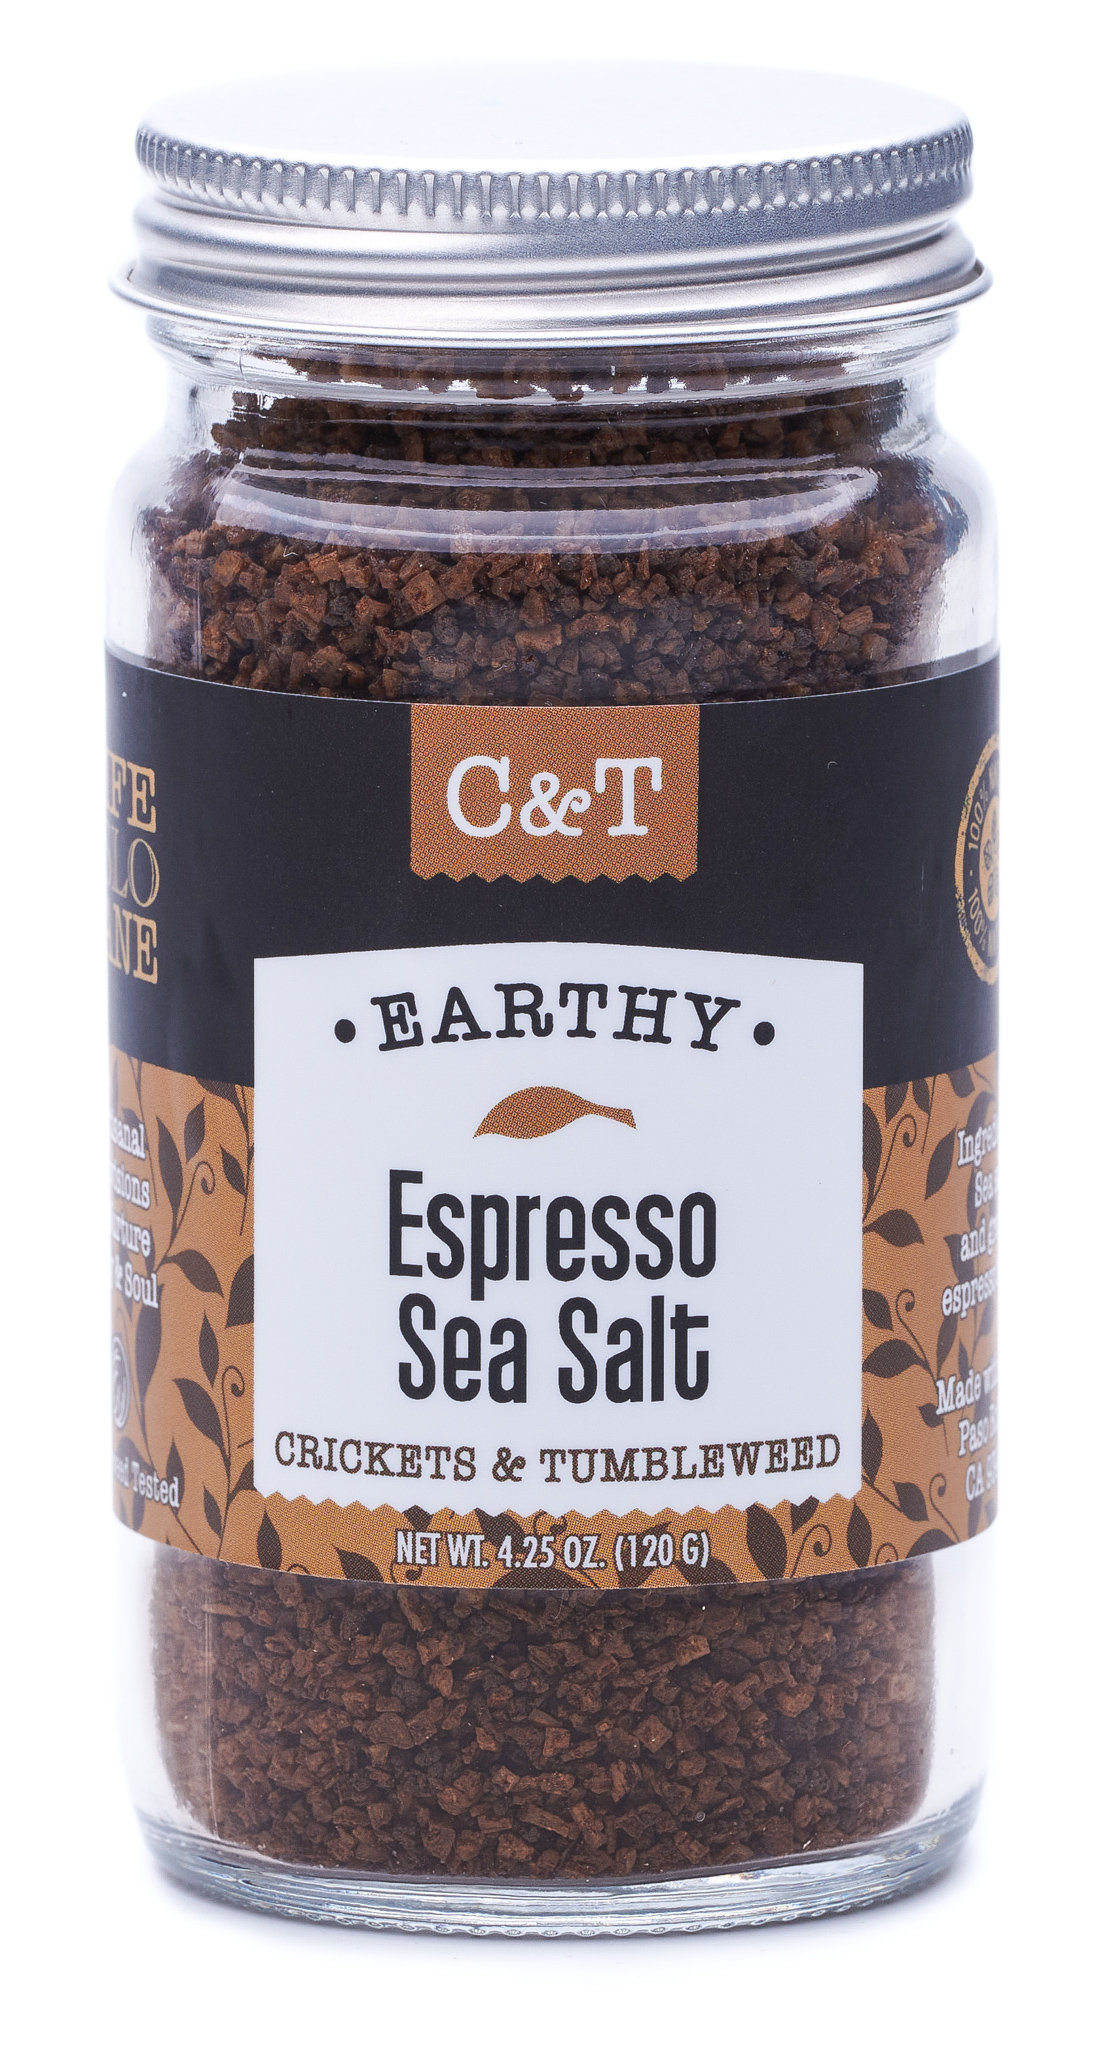 Product Image for C&T Sea Salt Espresso